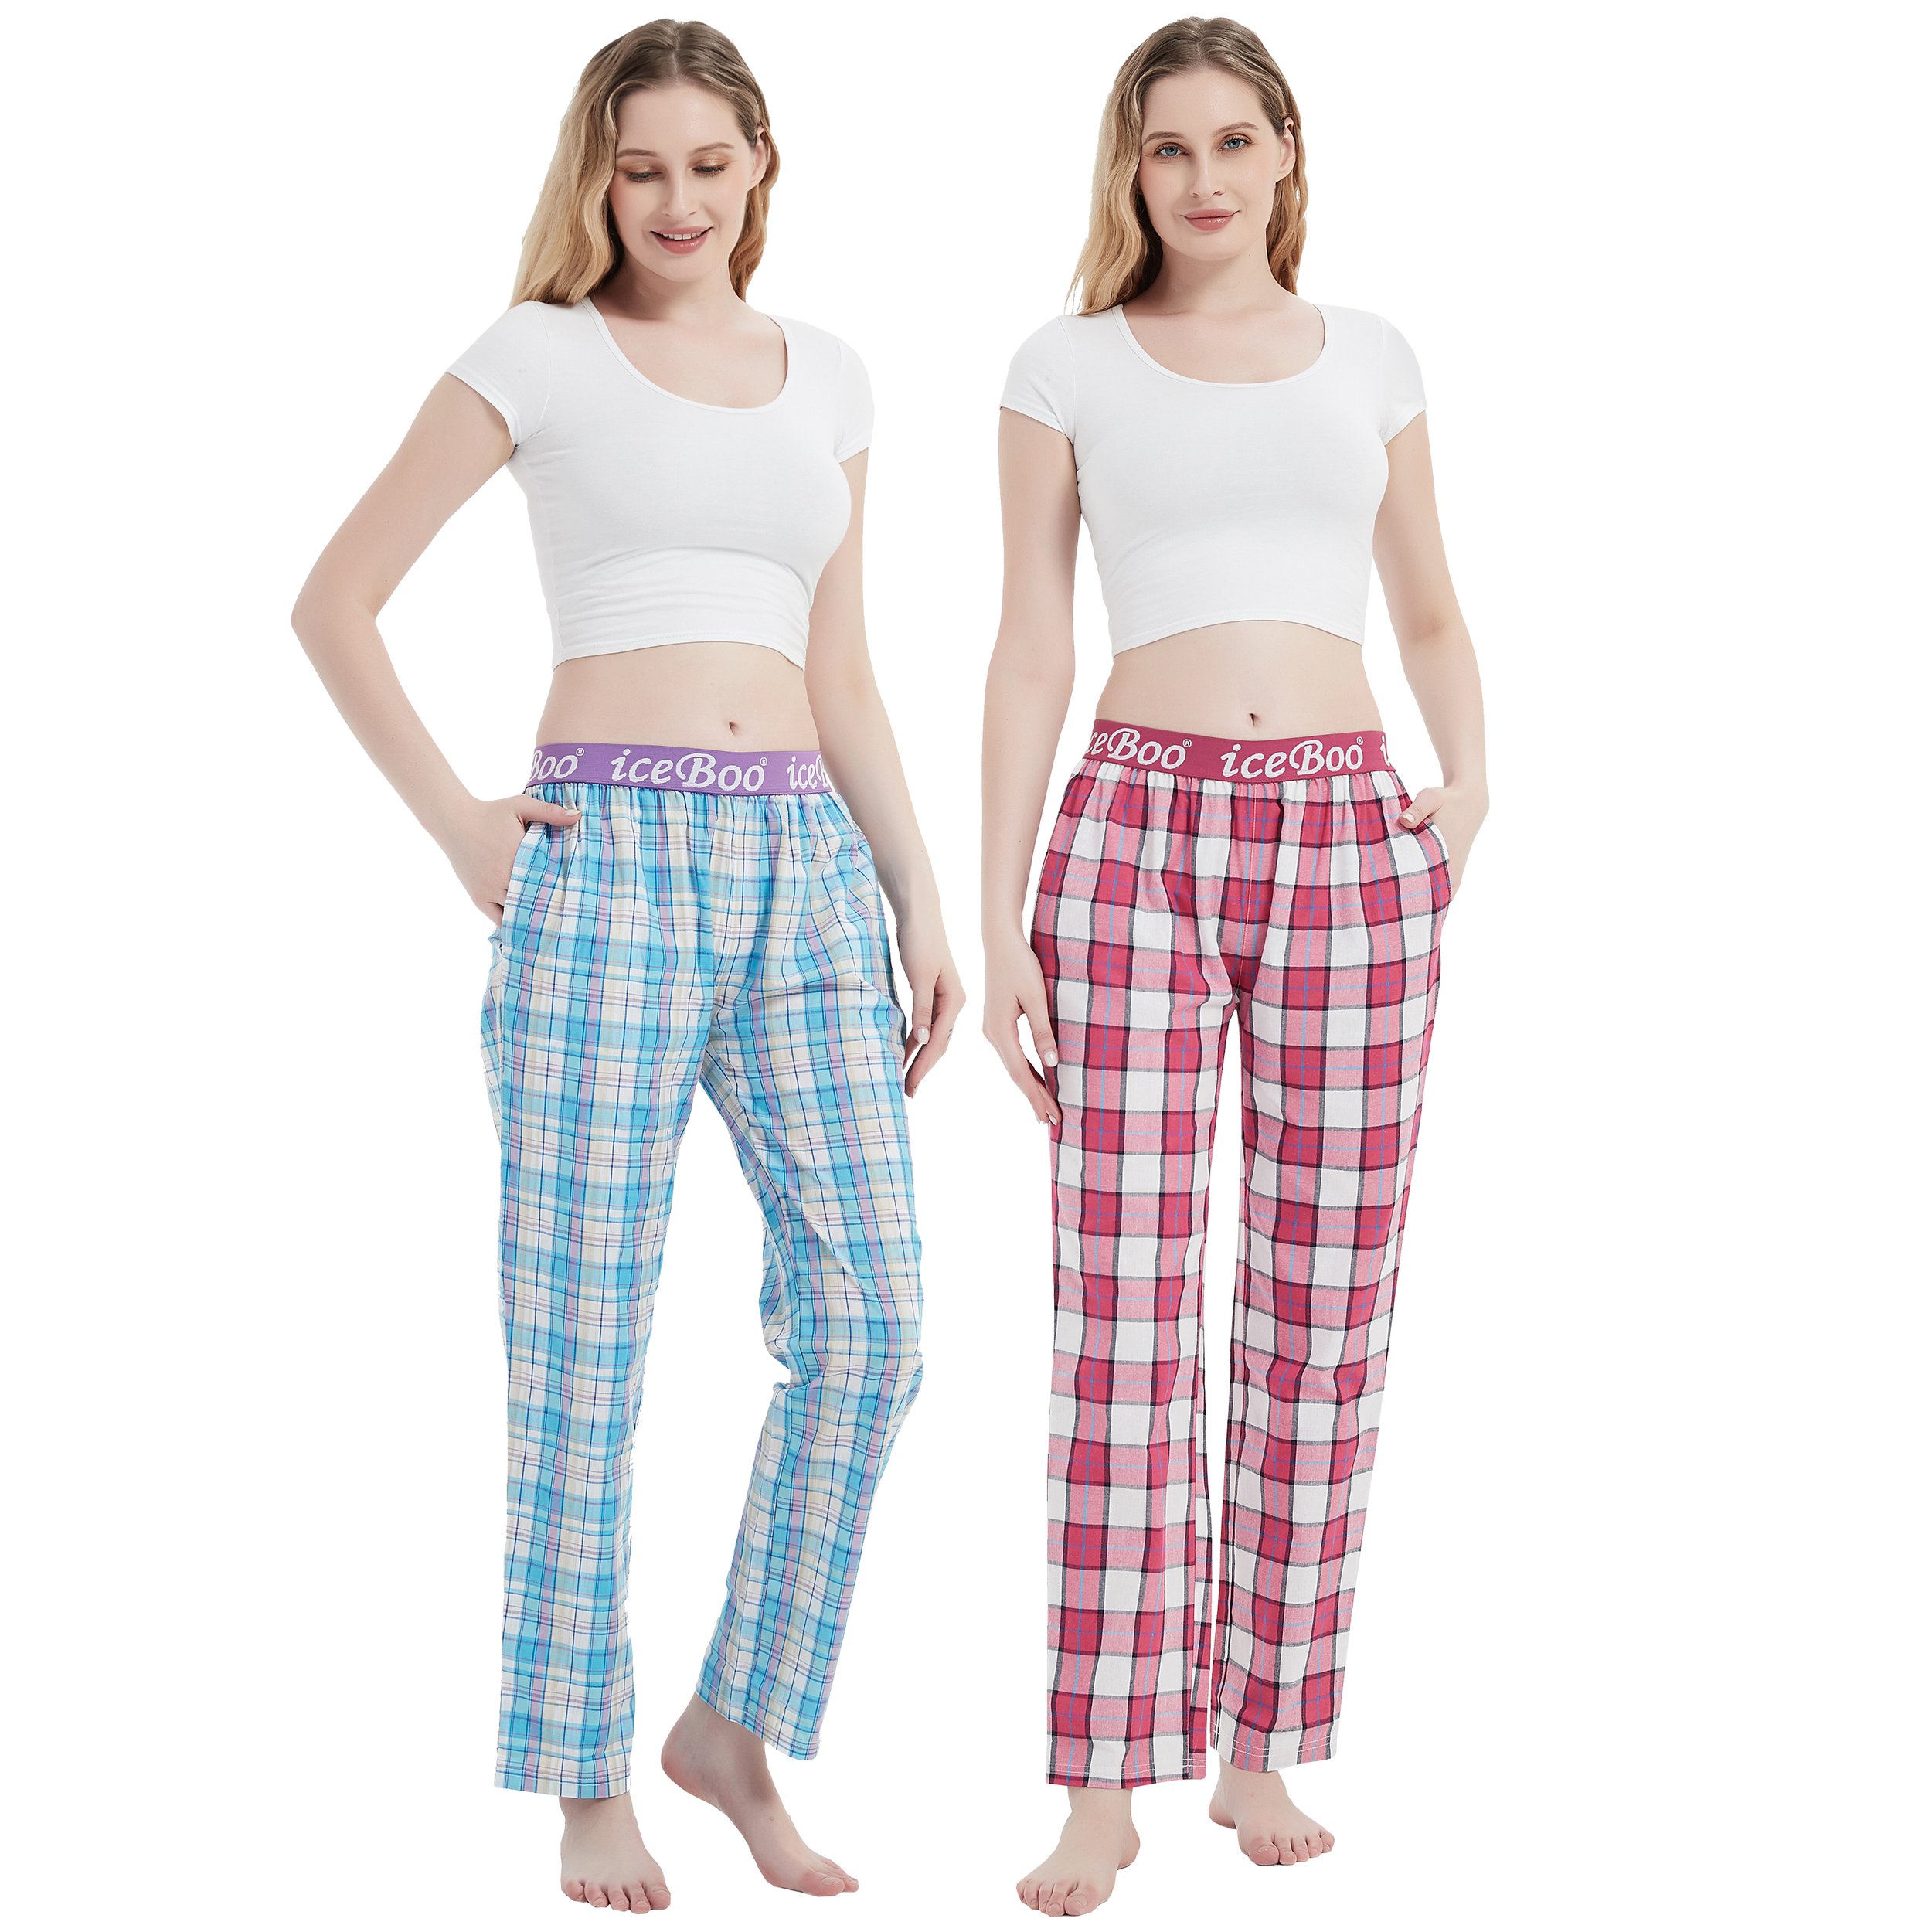 Women pj pants: Comfortable & Stylish Sleepwear Bottoms插图4